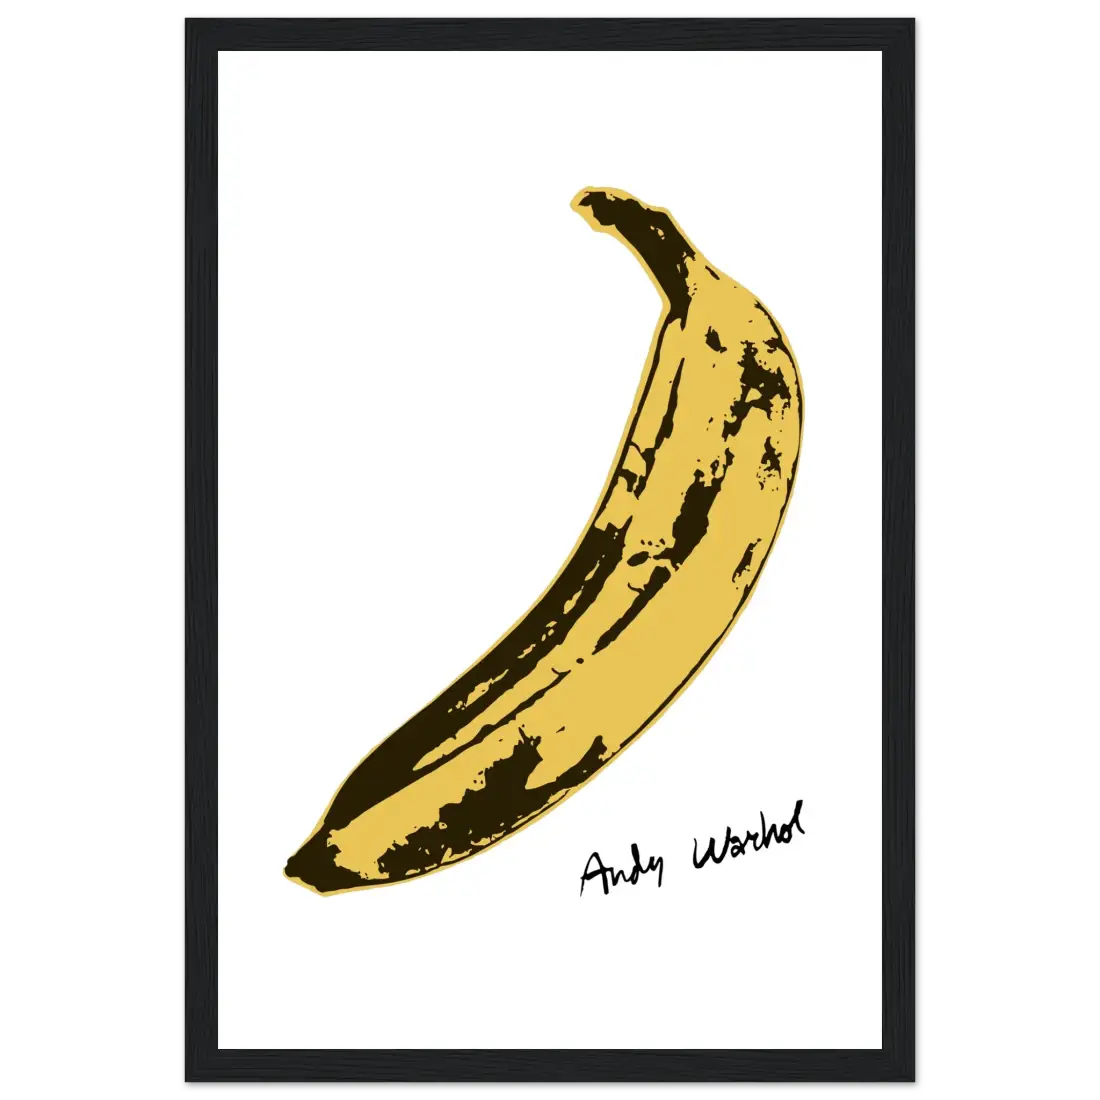 Andy Warhol's Banana, 1967 Pop Art Poster-8